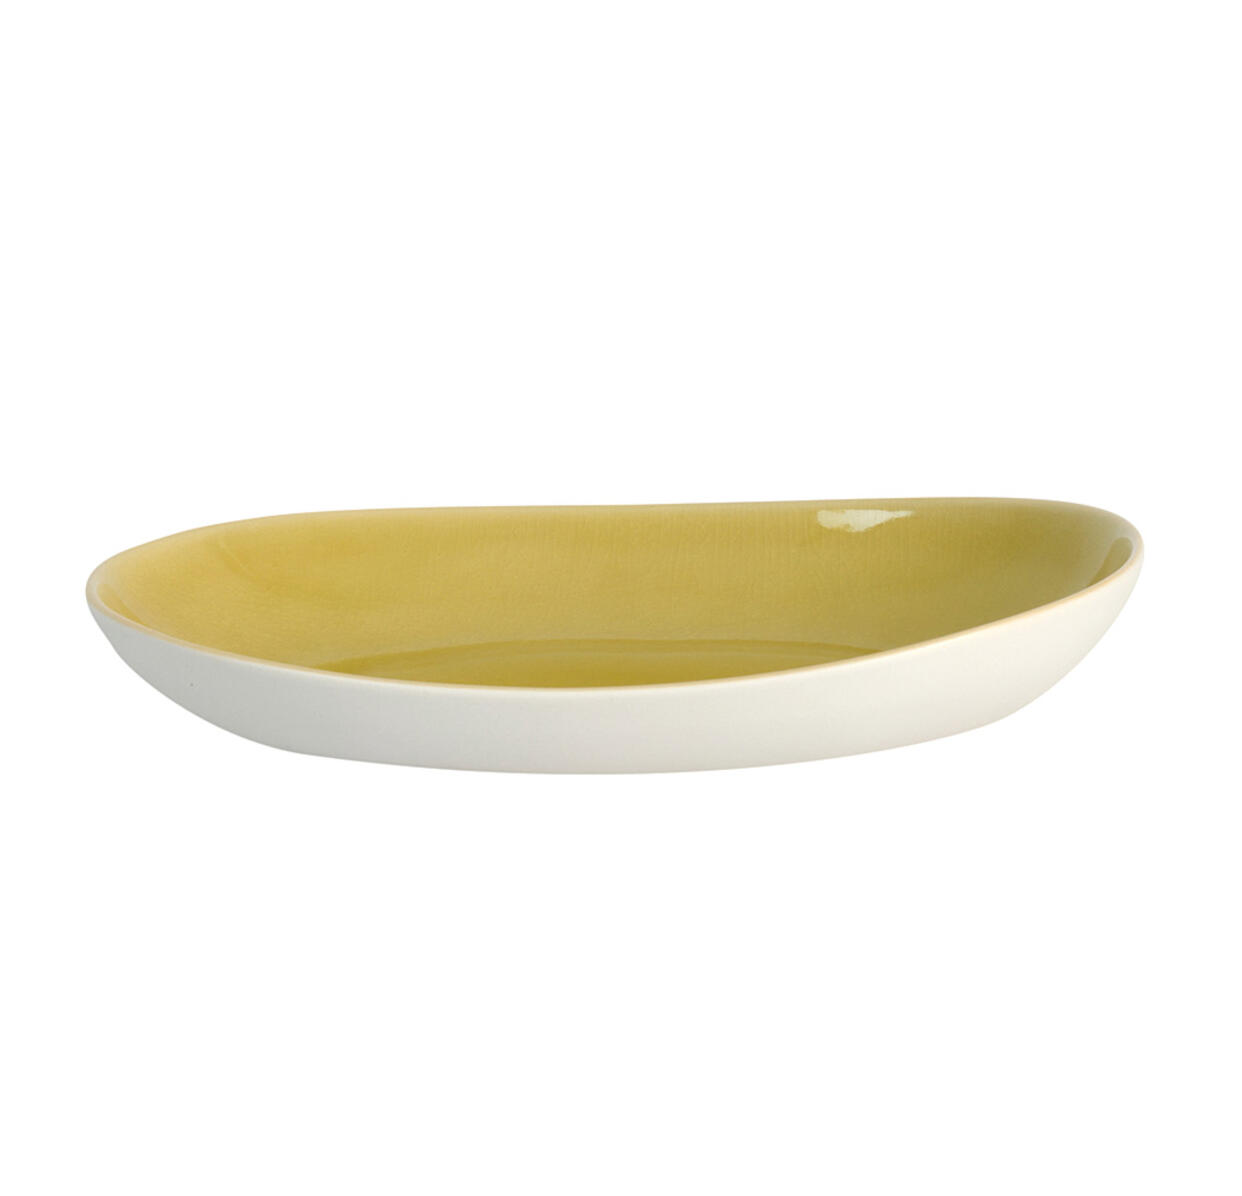 oval dish maguelone genet ceramic manufacturer